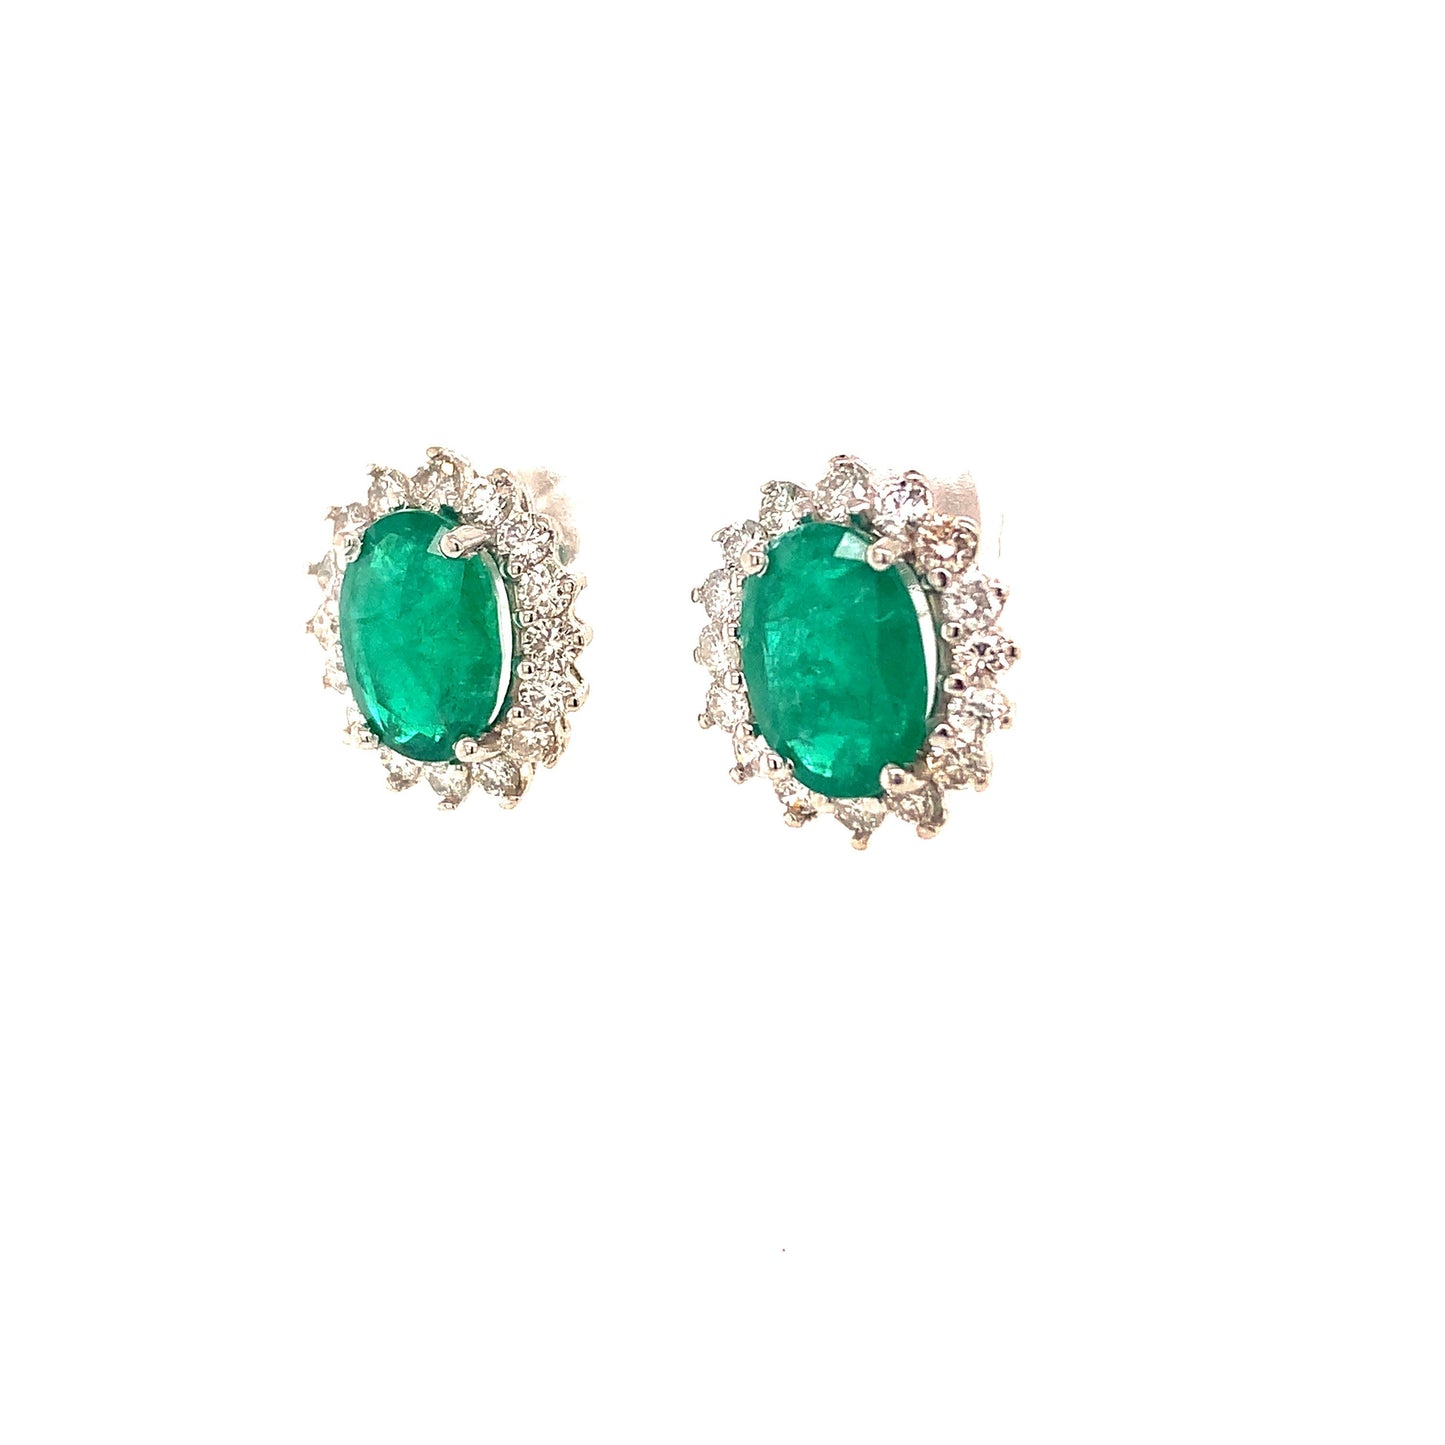 Natural Emerald Diamond Earrings 14k Gold 5.03 TCW Certified $6,550 113437